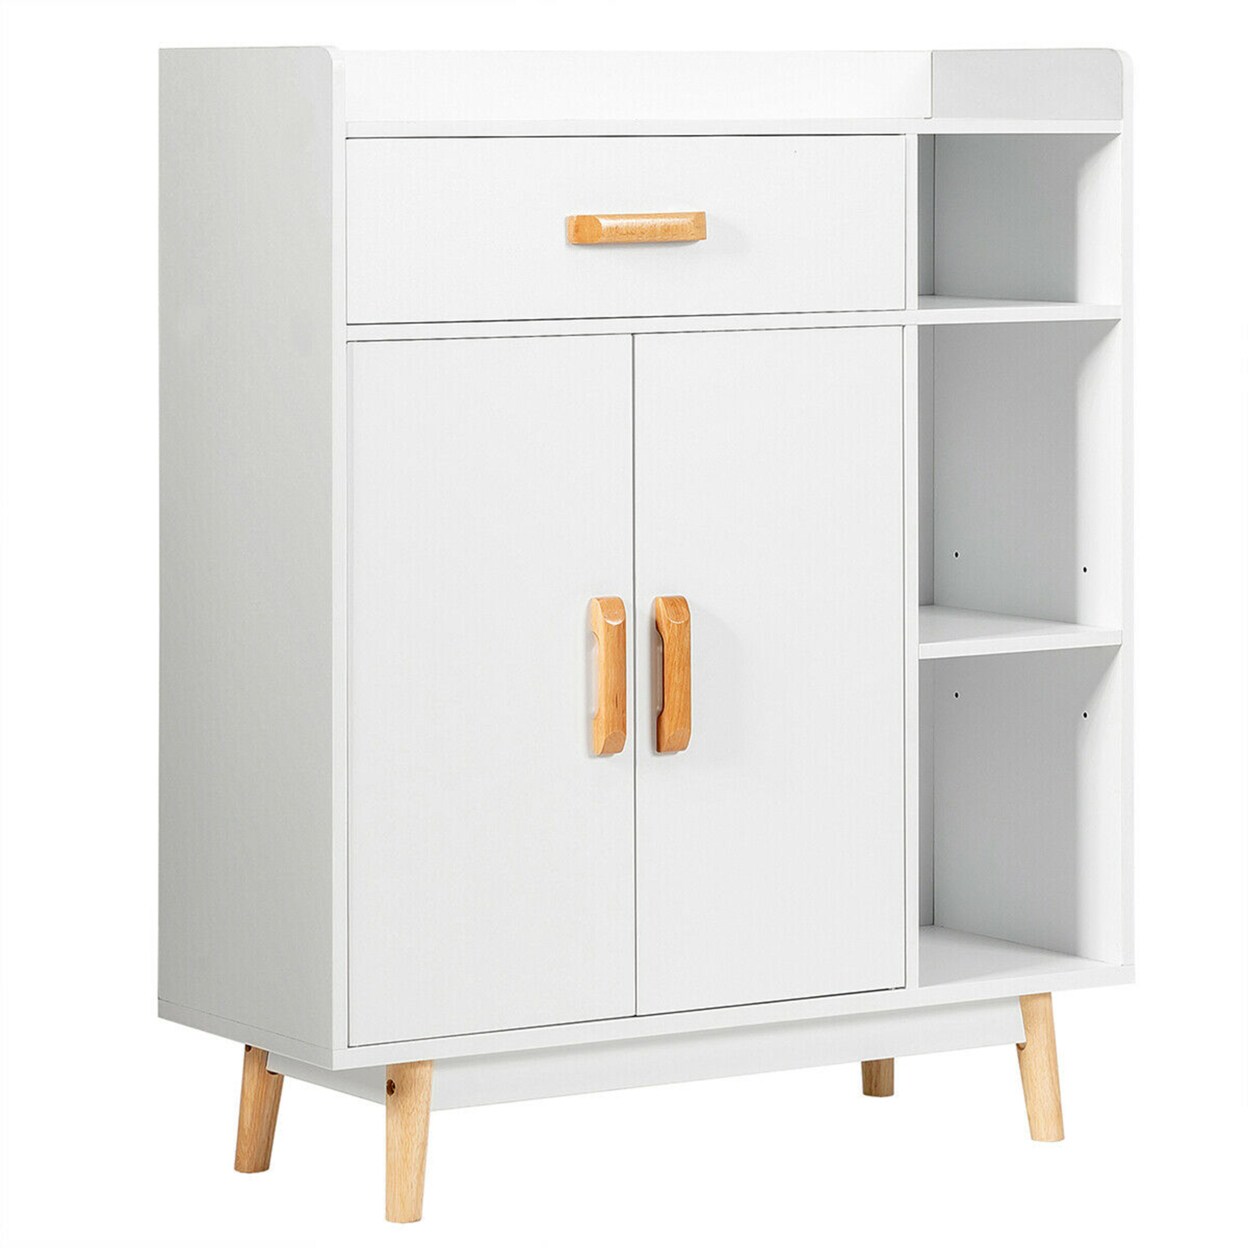 Gymax Floor Storage Cabinet Free Standing Cupboard Chest w/1 Drawer 2 Doors 3 Shelves